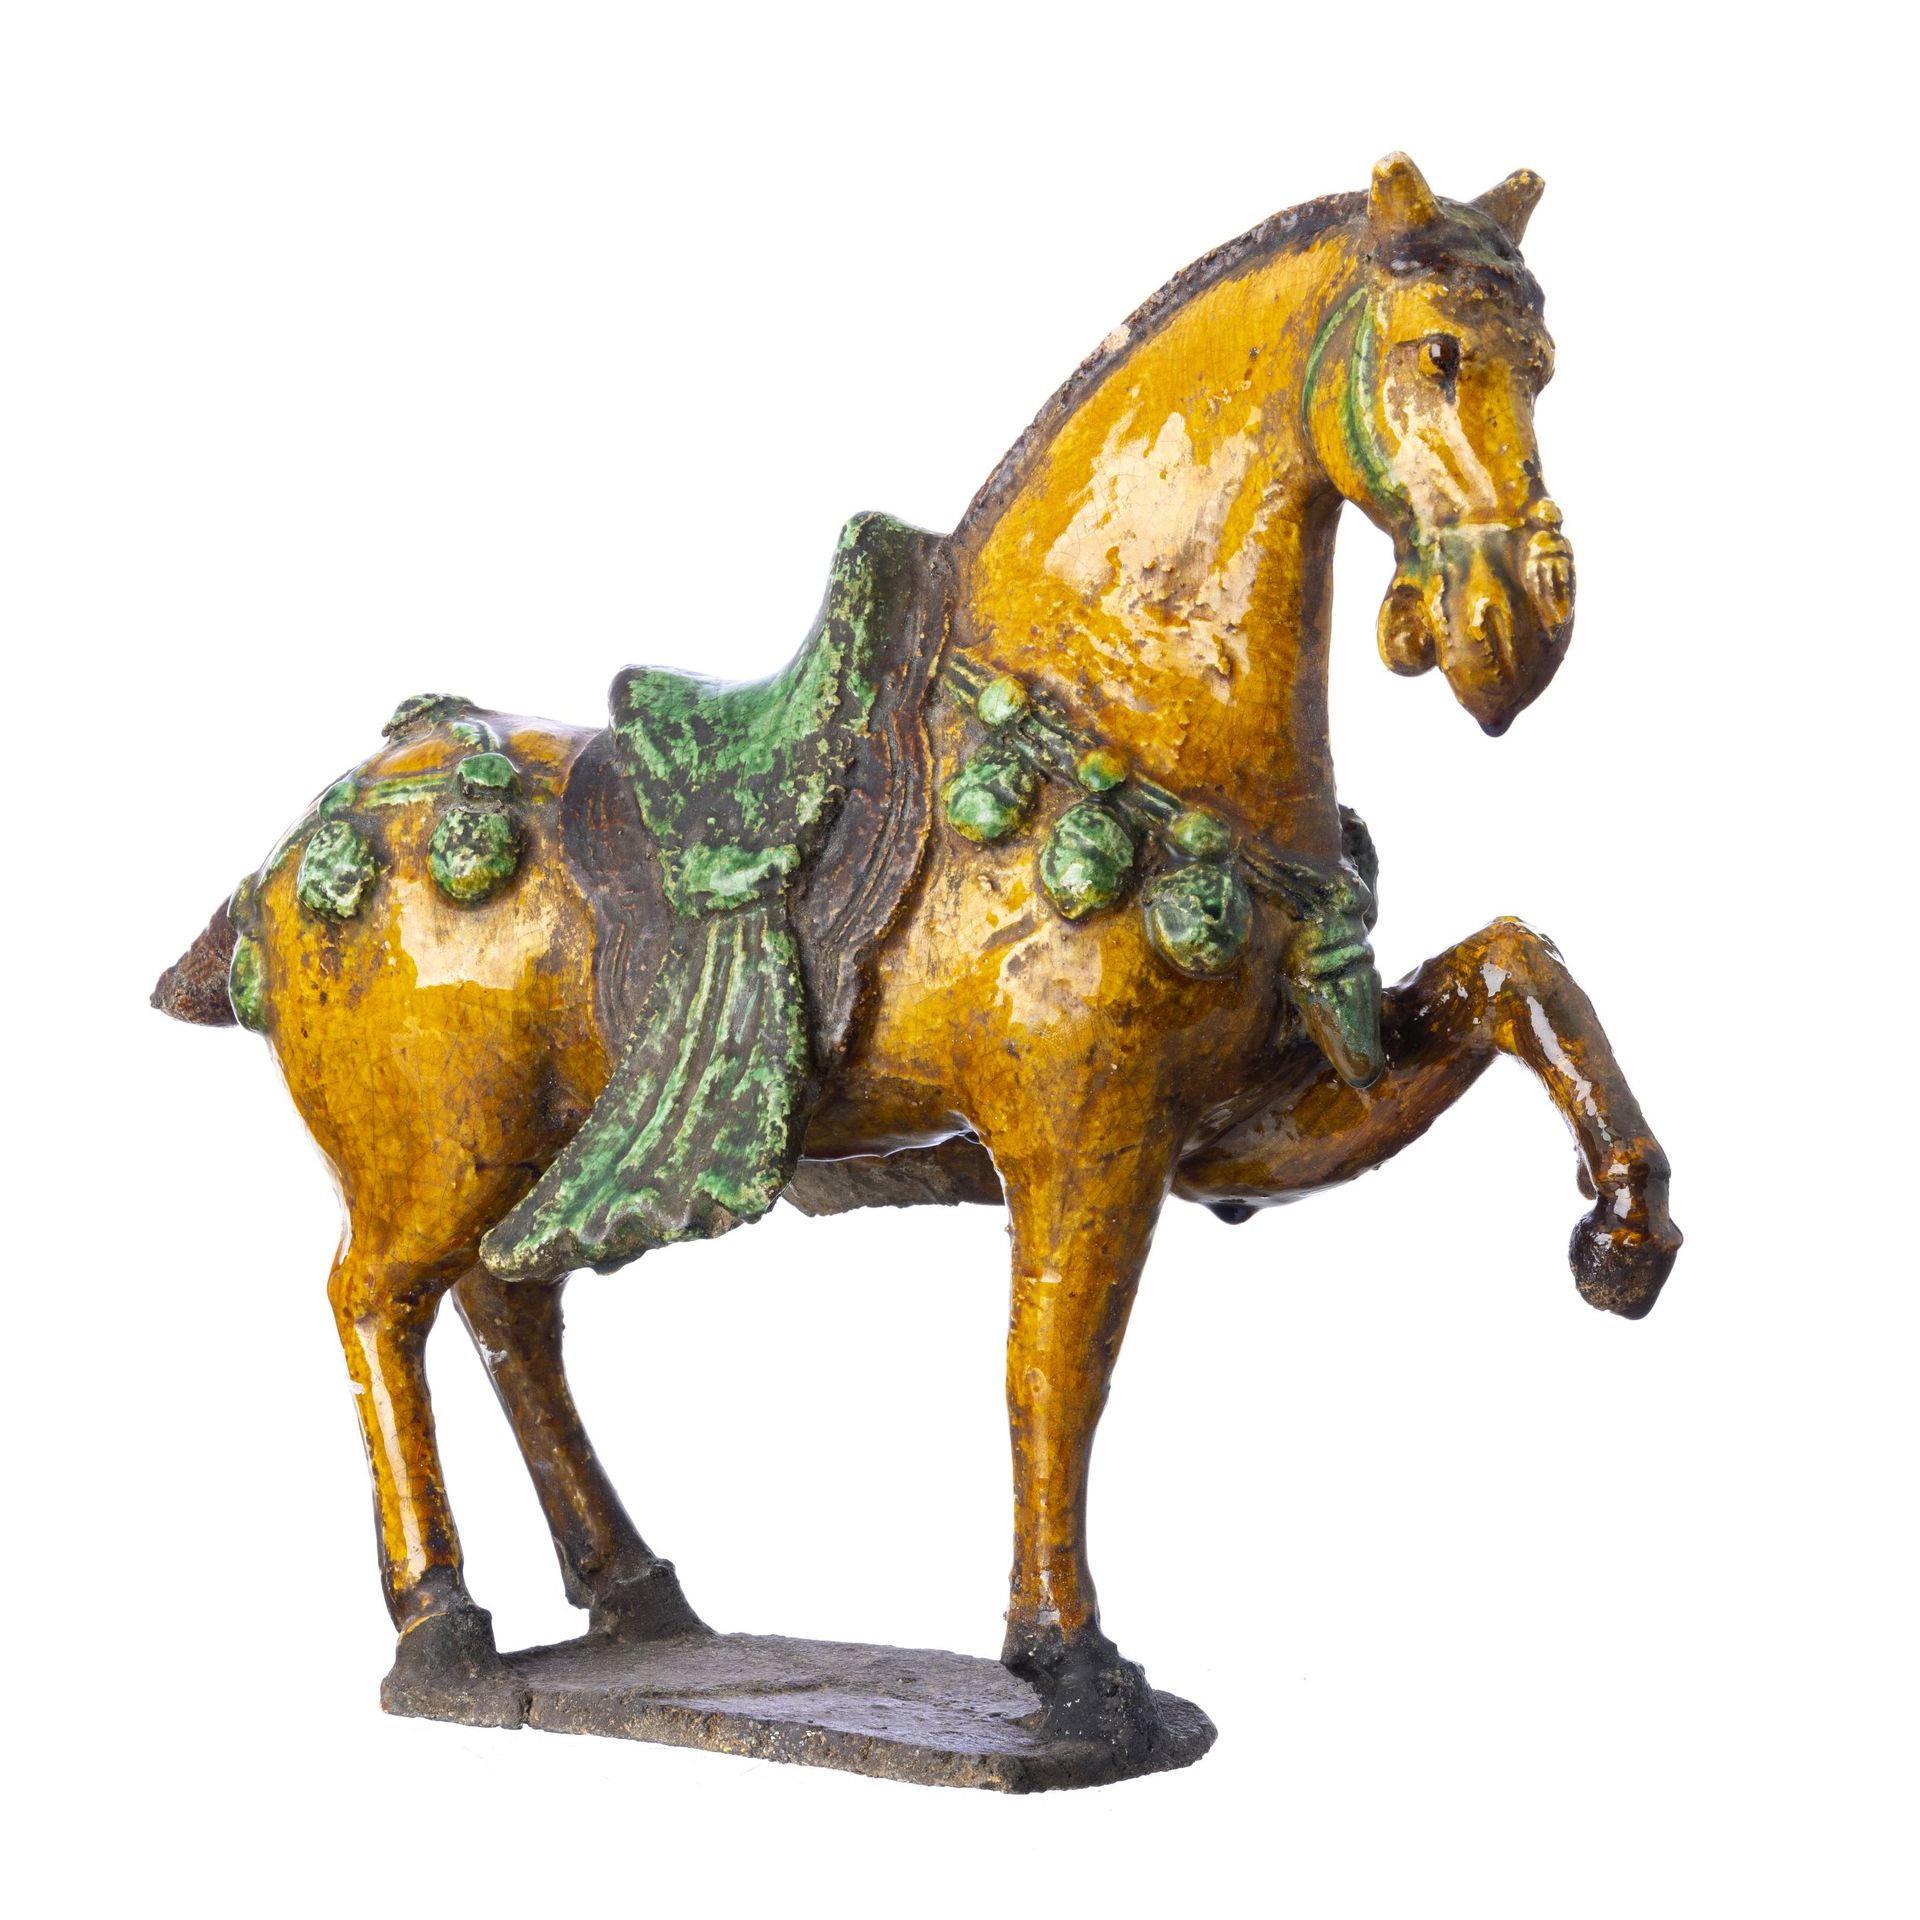 Horse in chinese ceramic 中国陶瓷中的马 中国，20世纪，带多色装饰的陶器雕塑，描绘了一匹马。有磨损的痕迹，轻微缺陷。尺寸：33厘米